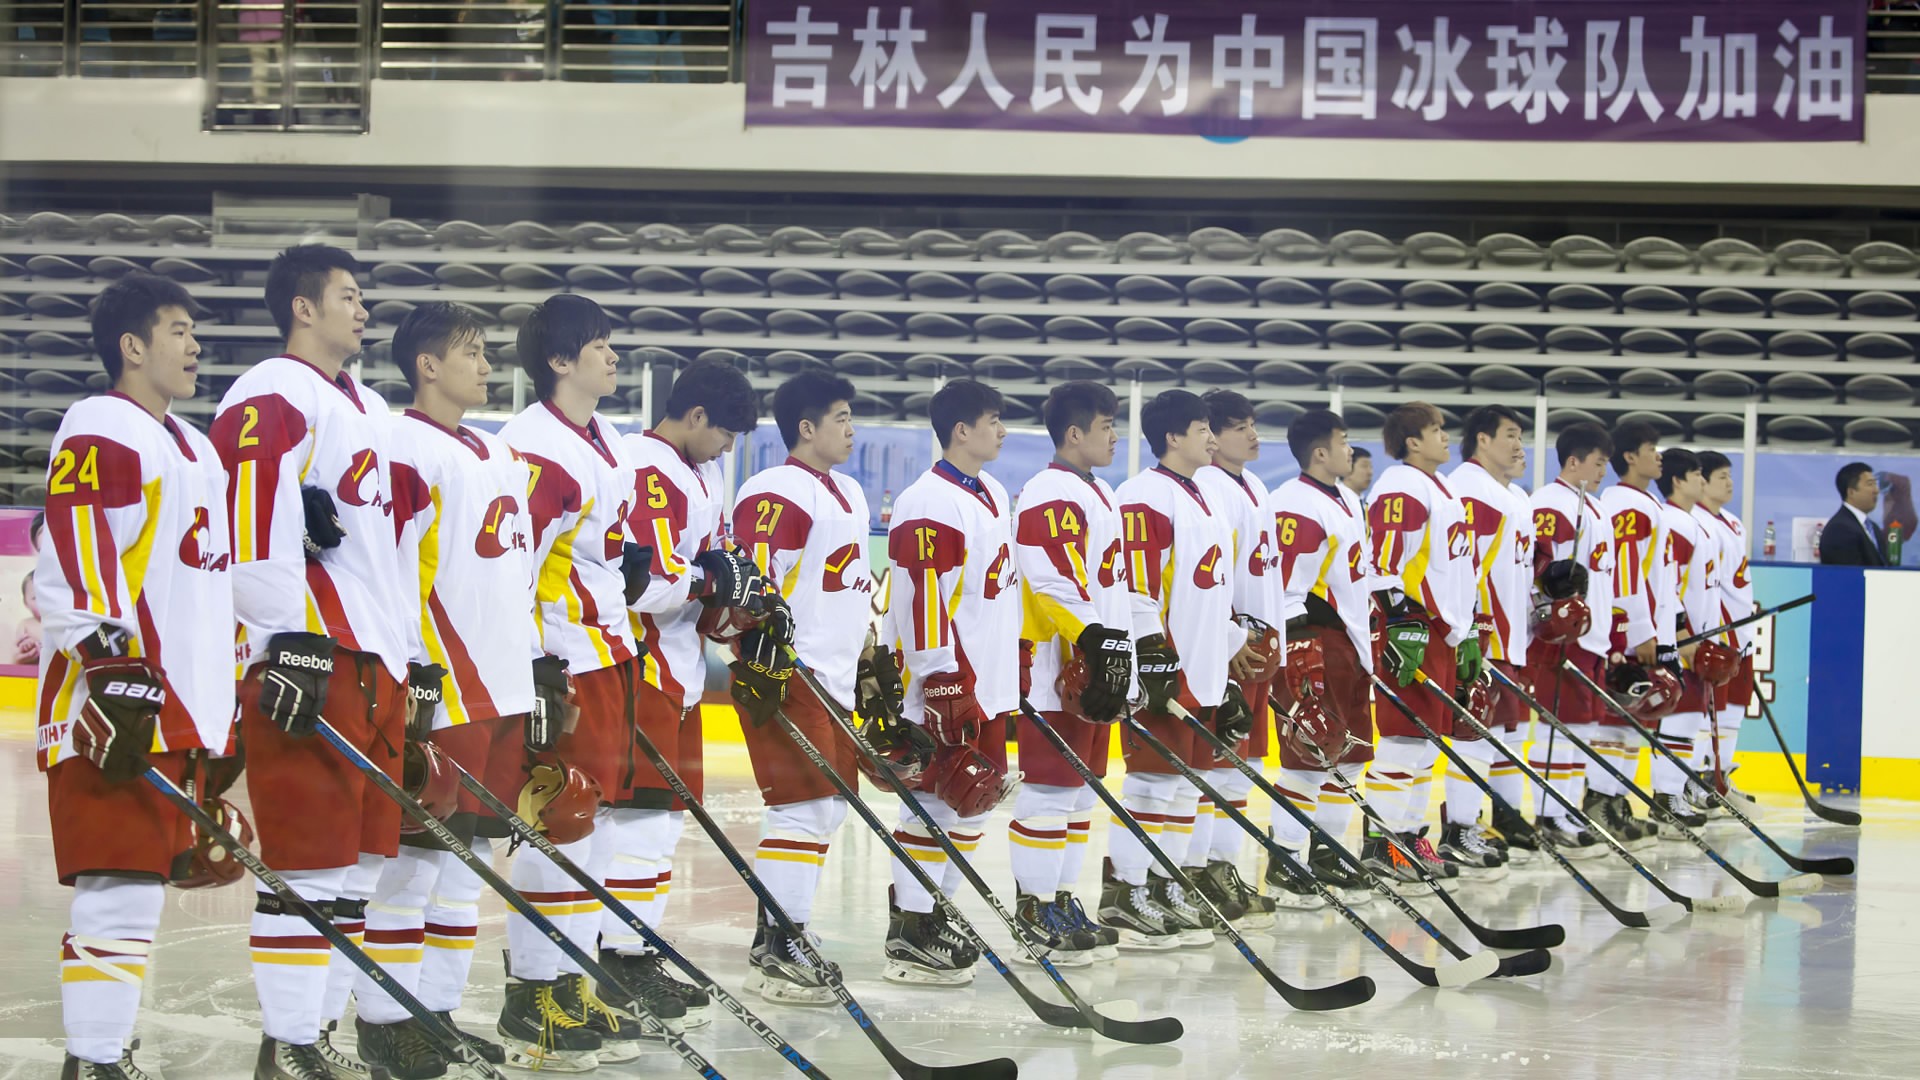 chinese hockey jerseys